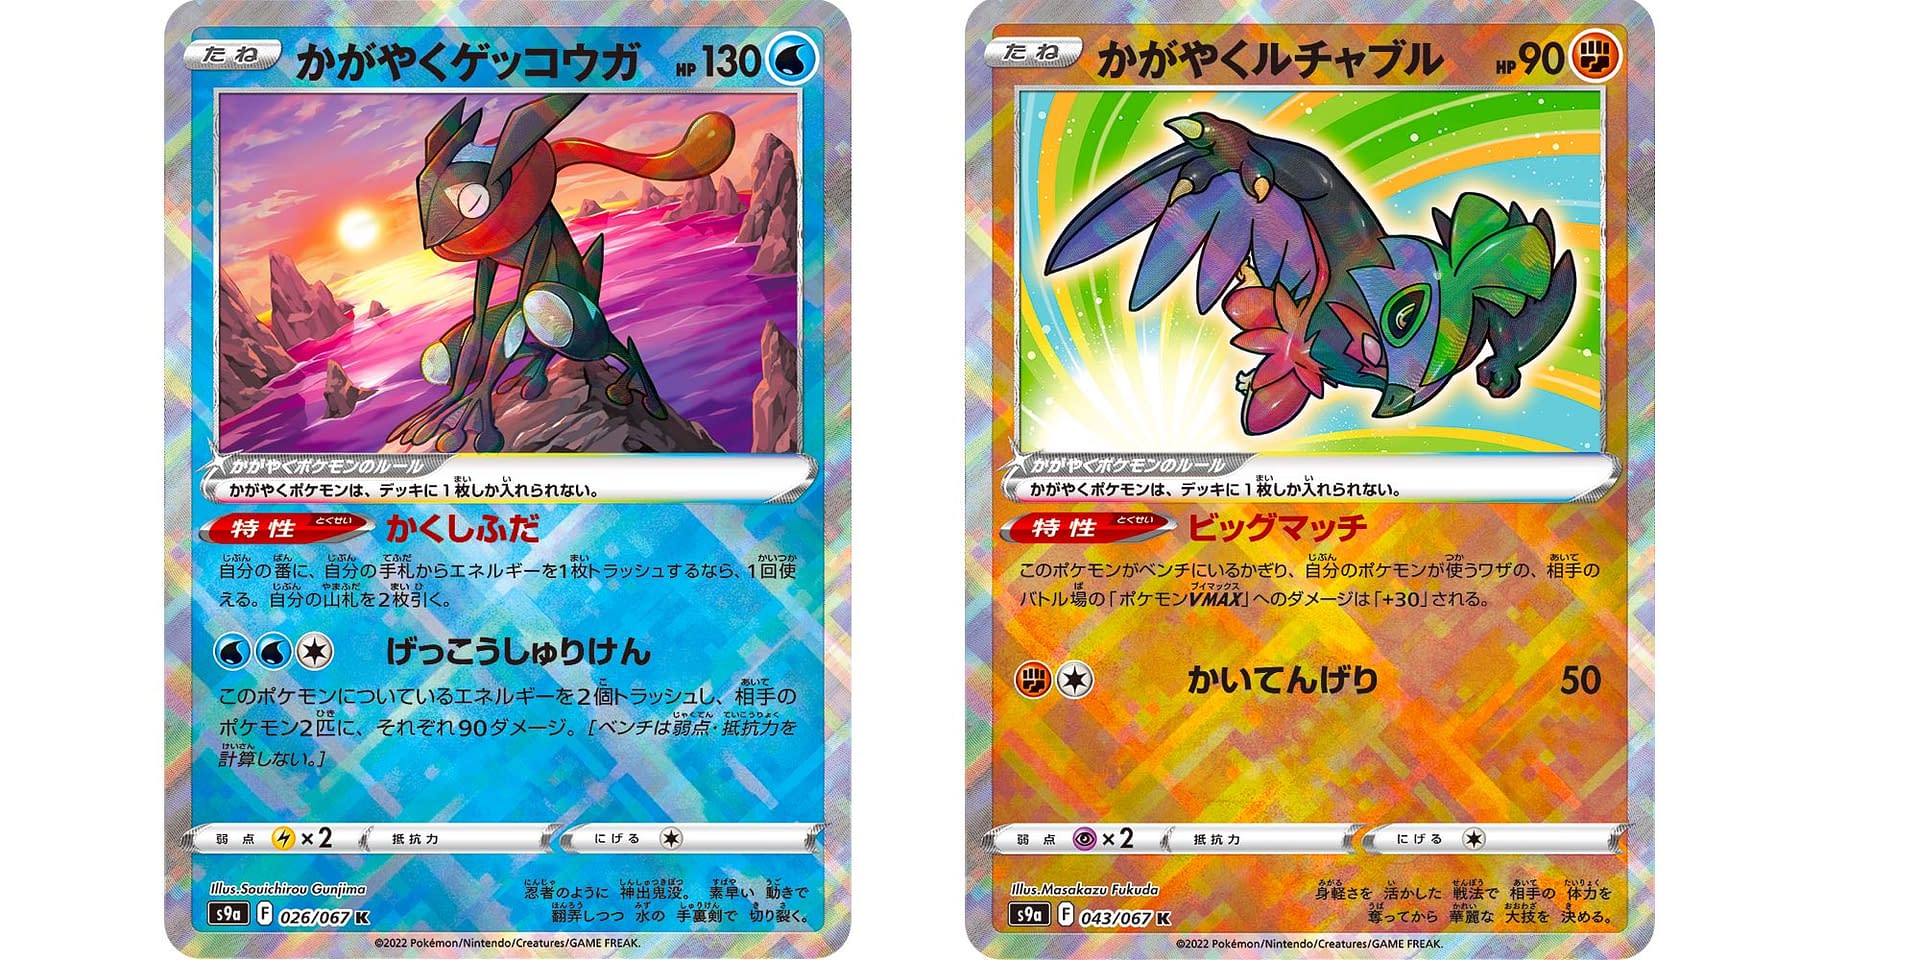 Shiny Pokémon Return to Pokémon TCG in 2022 As &quot;Sparkling&quot; Cards